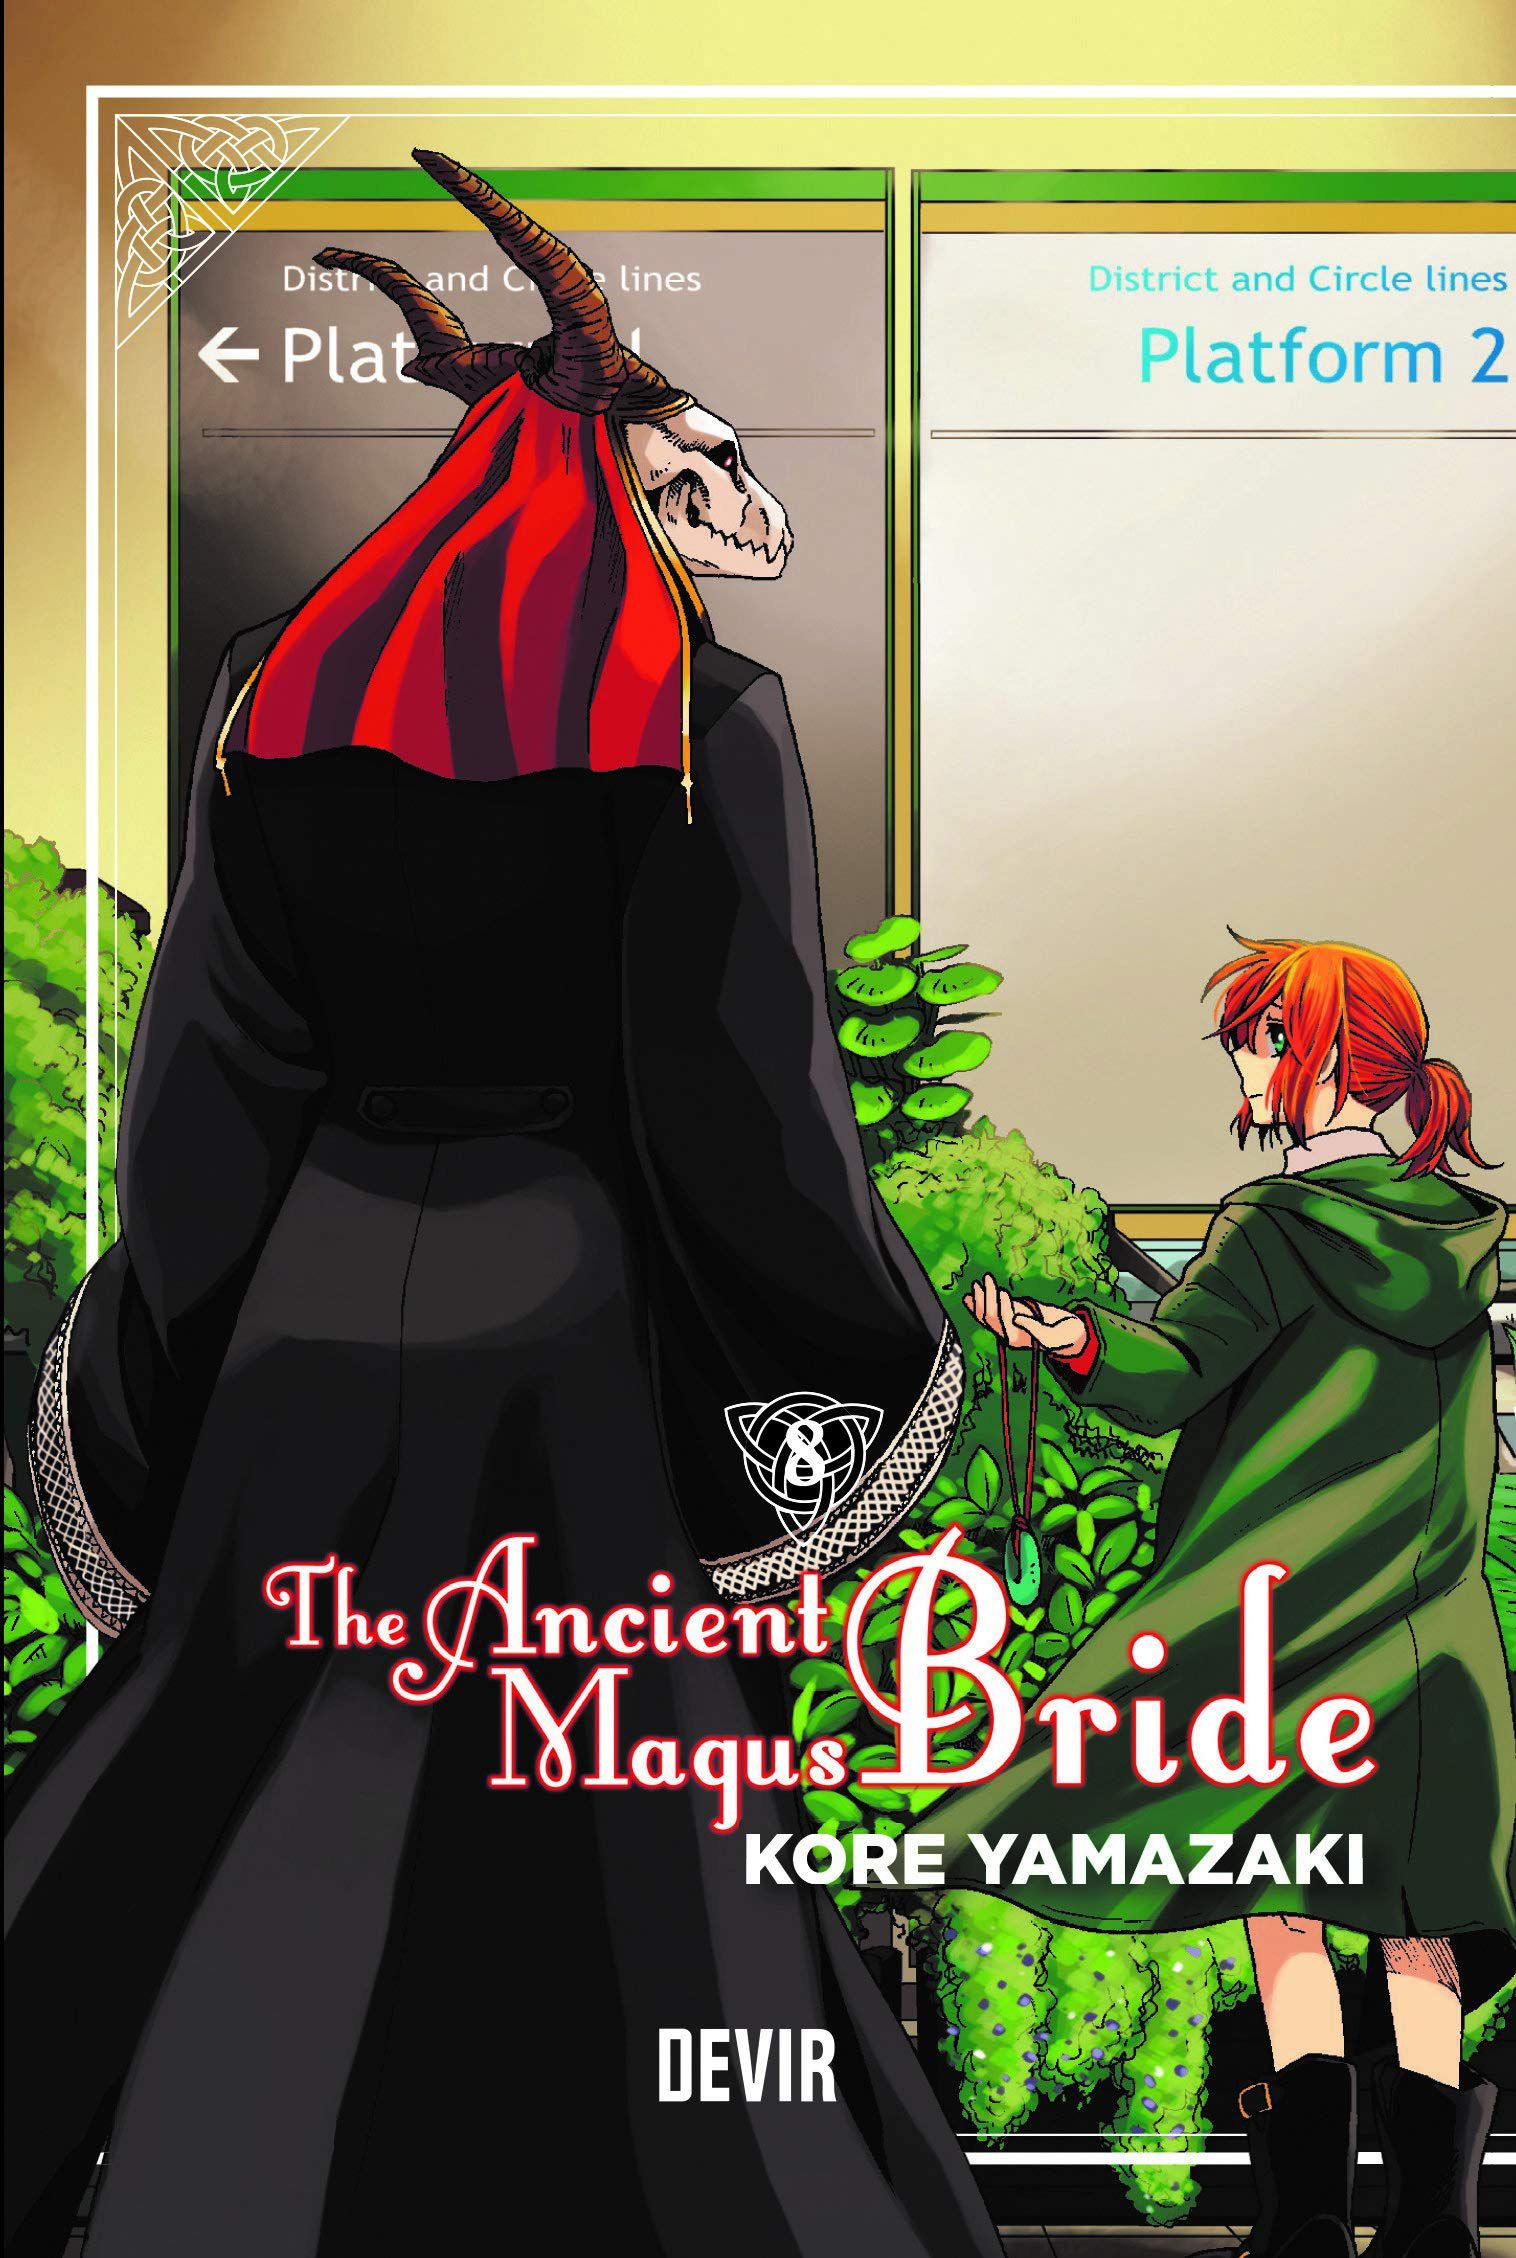 The Ancient Magus' Bride Vol. 2